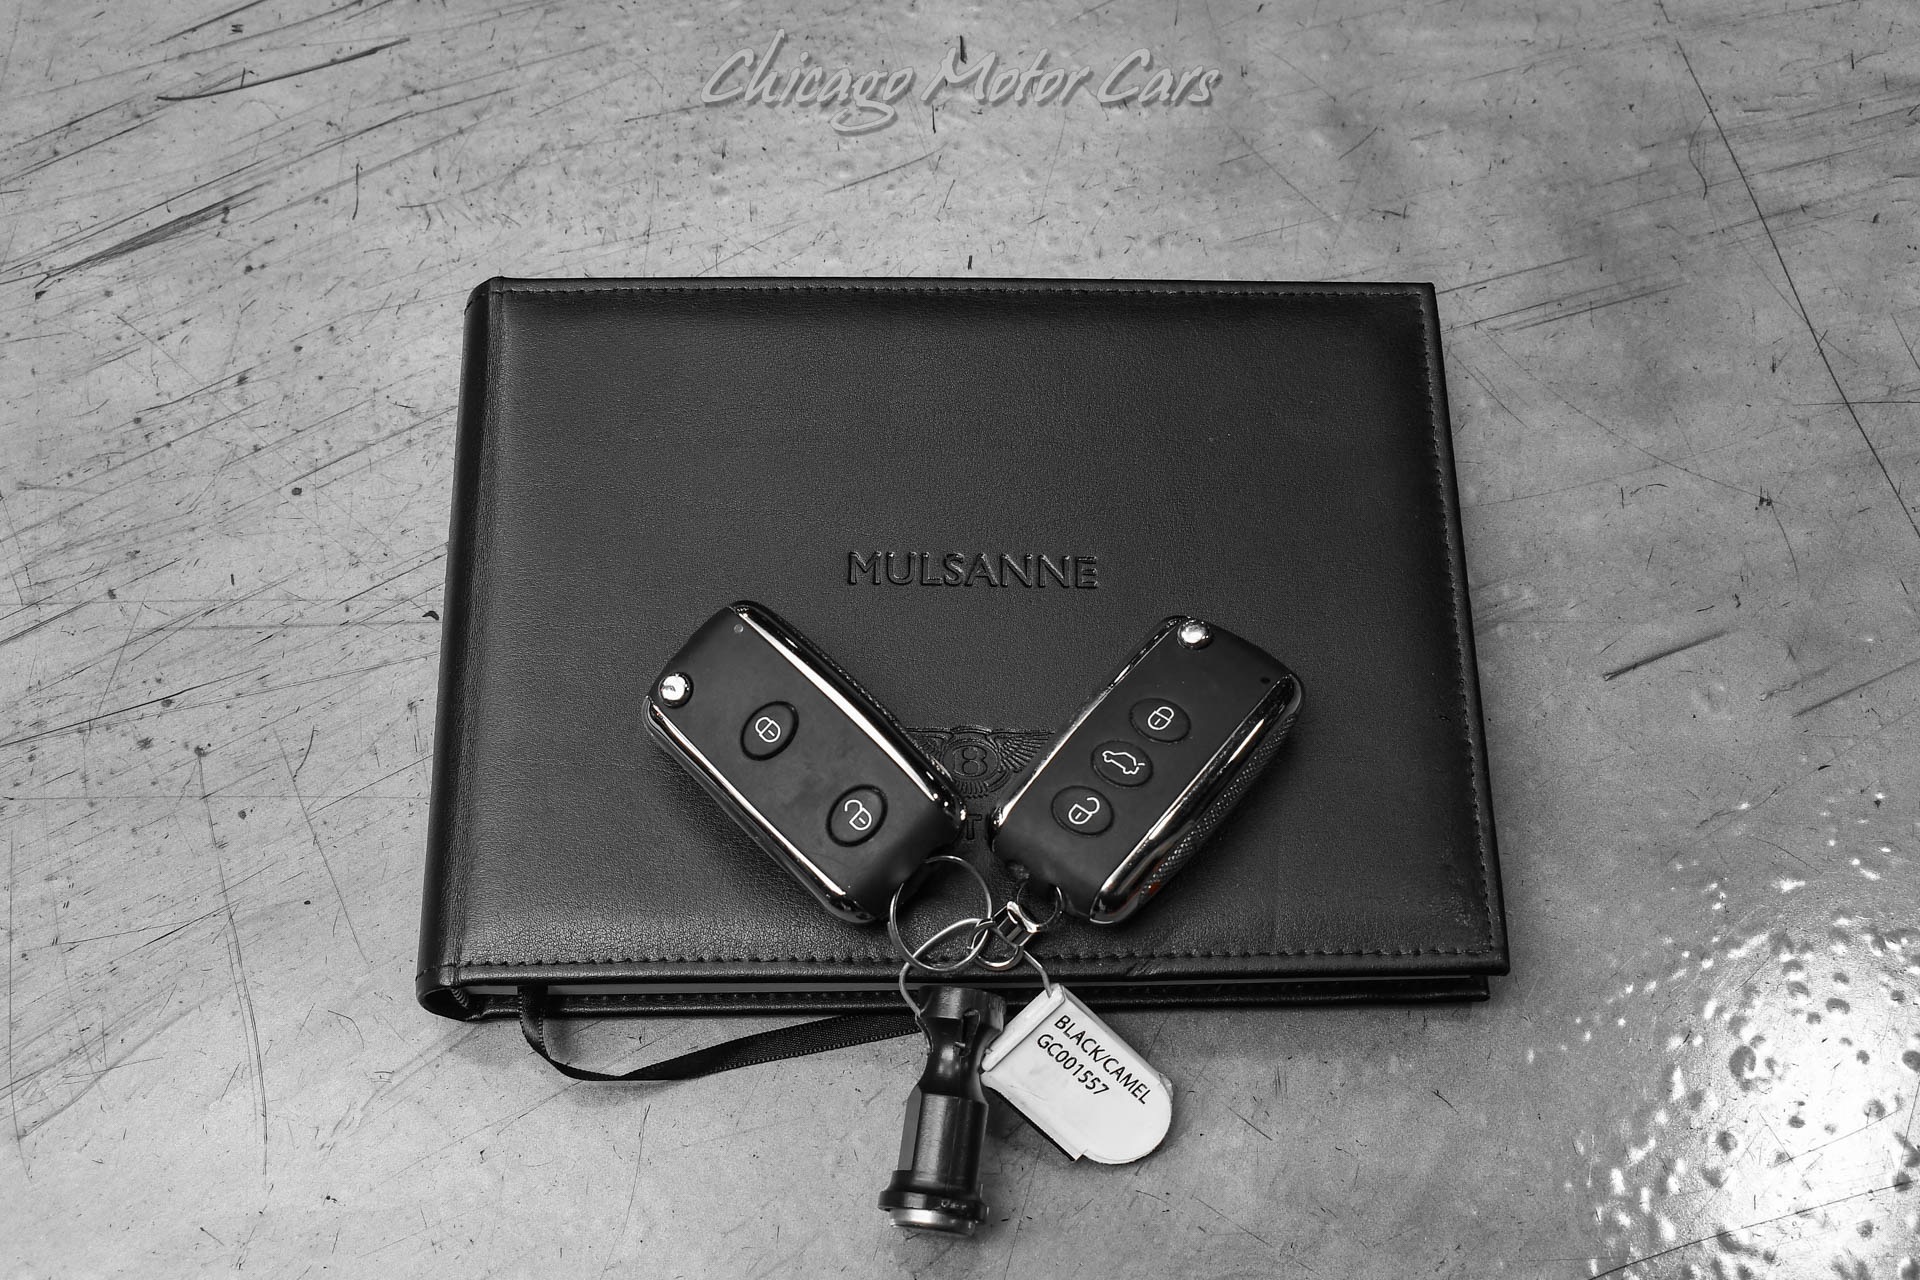 Used-2016-Bentley-Mulsanne-Speed-Original-MSRP-384127-LOADED-BlackTan-Serviced